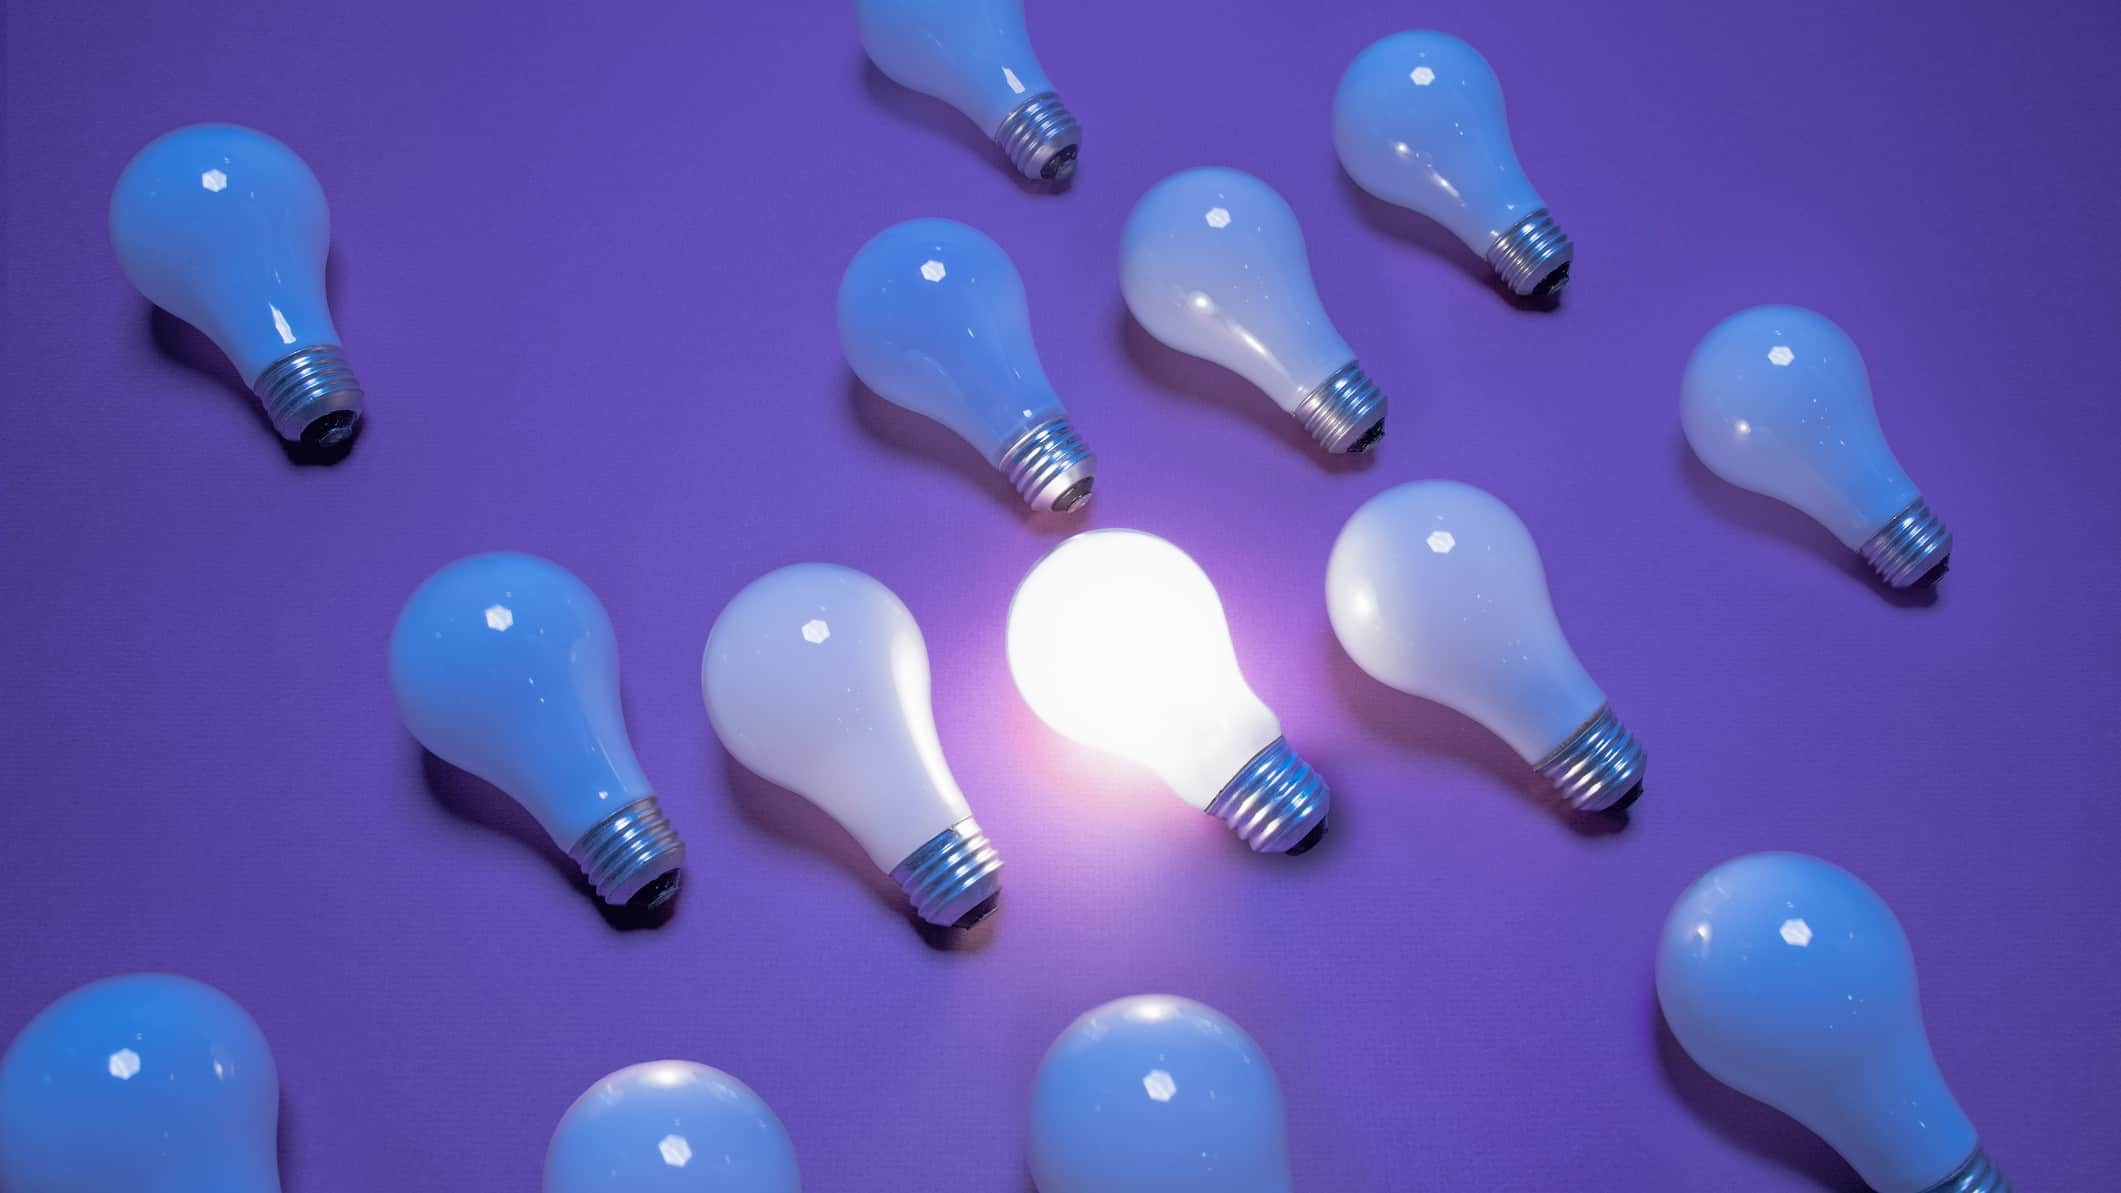 Energy light bulbs with one lit up